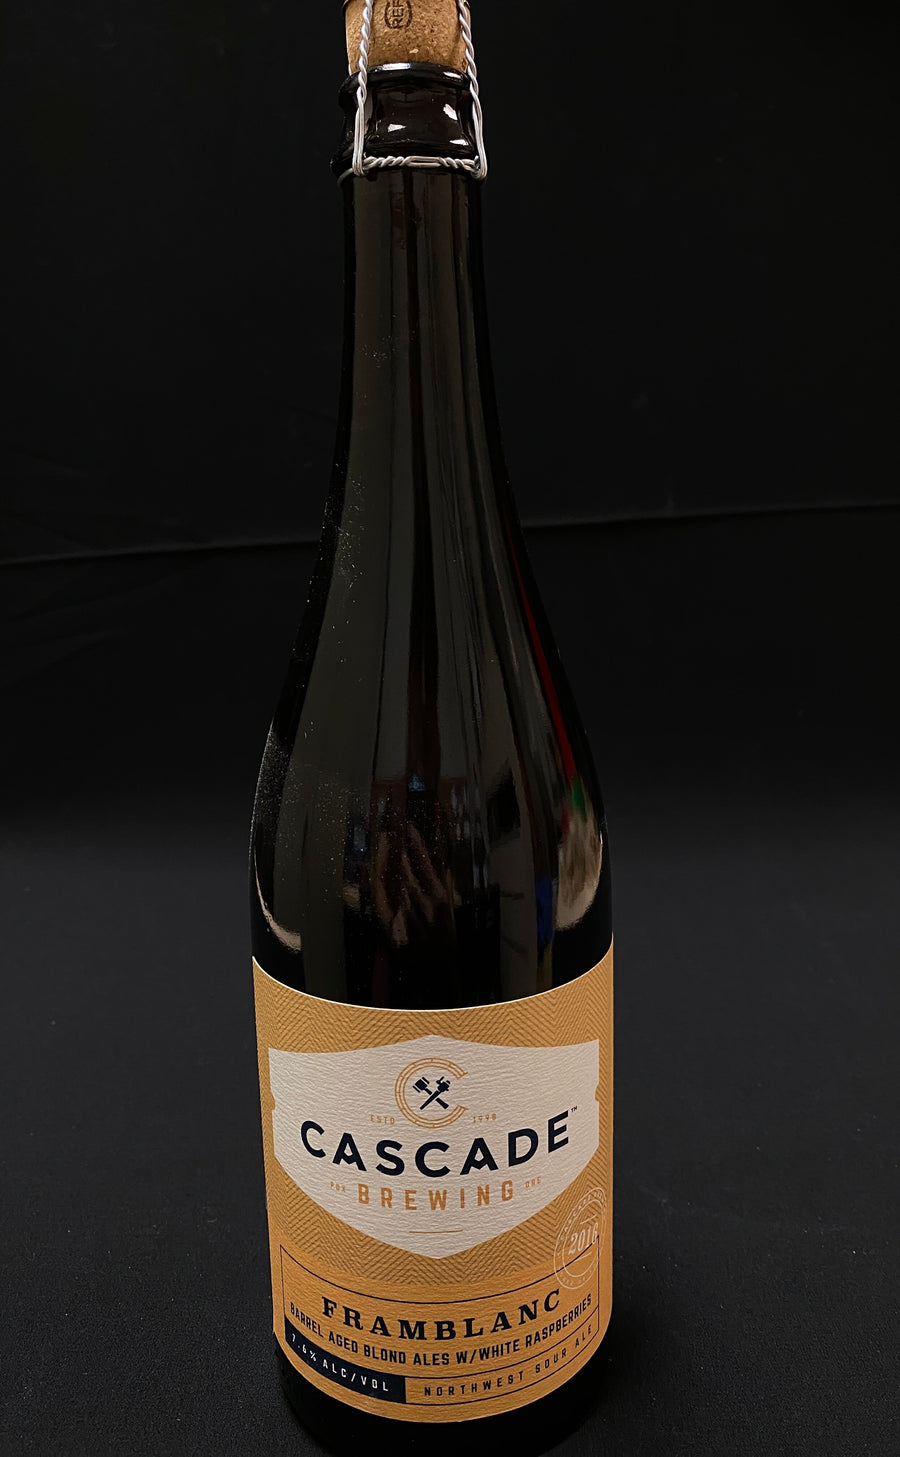 Cascade Framblanc 2016